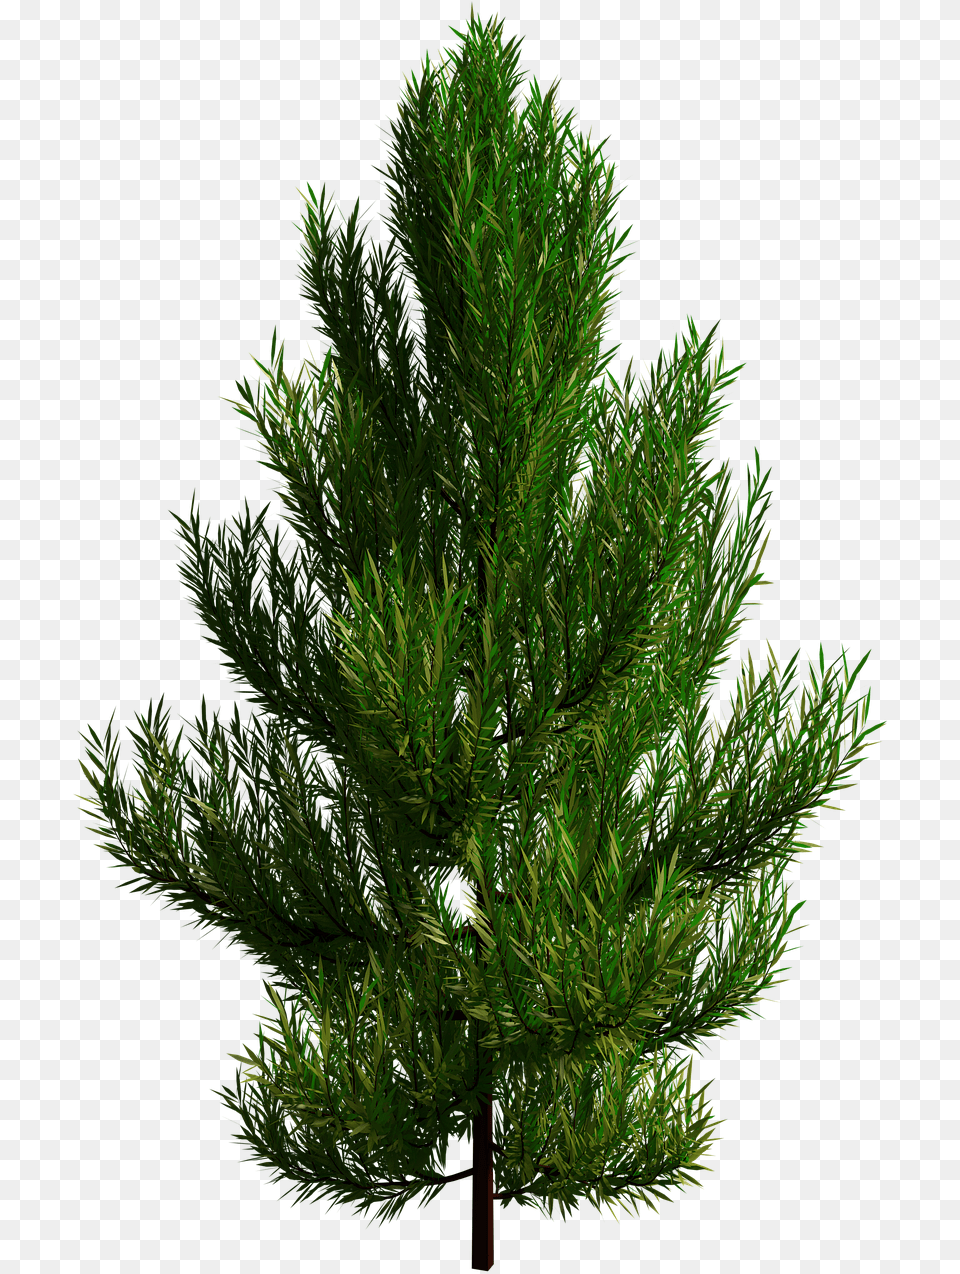 Tree Branch Baum, Conifer, Pine, Plant, Fir Png Image